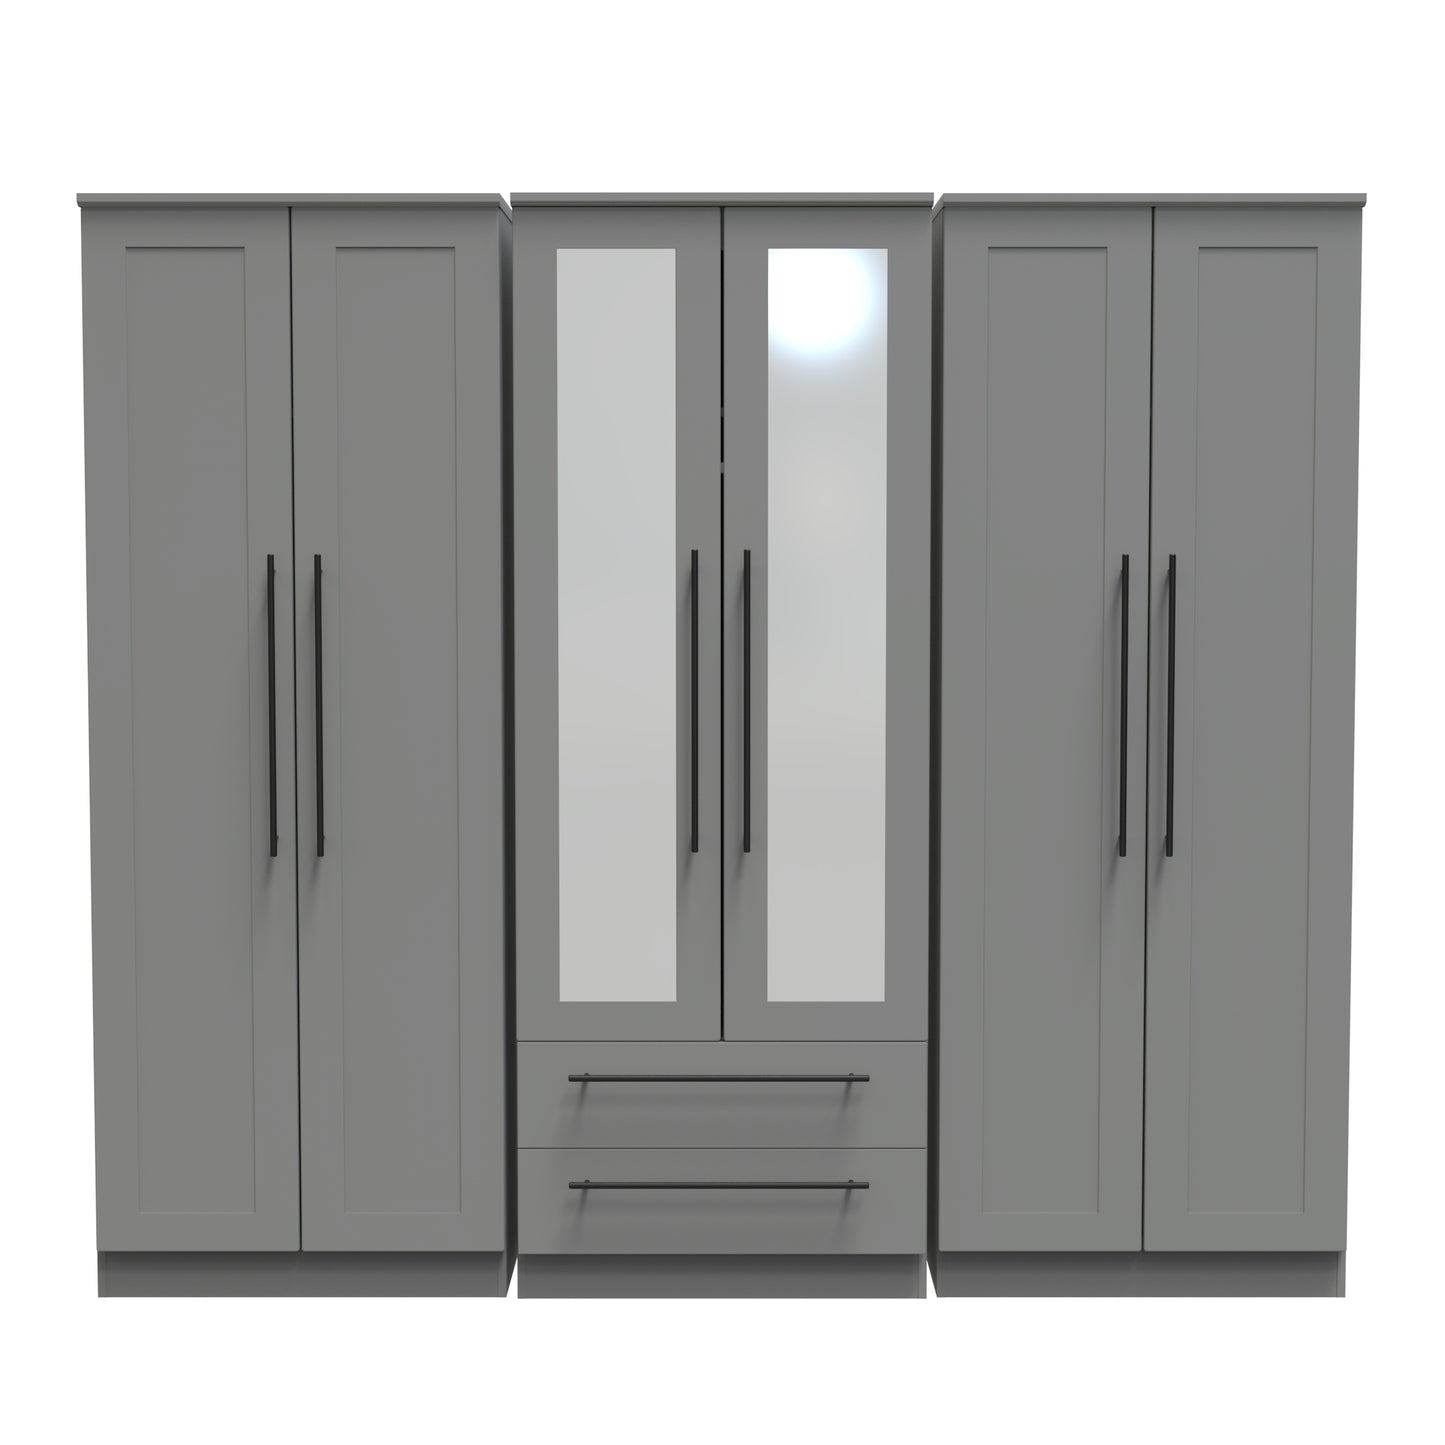 Beverley Tall 6 Door Wardrobe in Dusk Grey